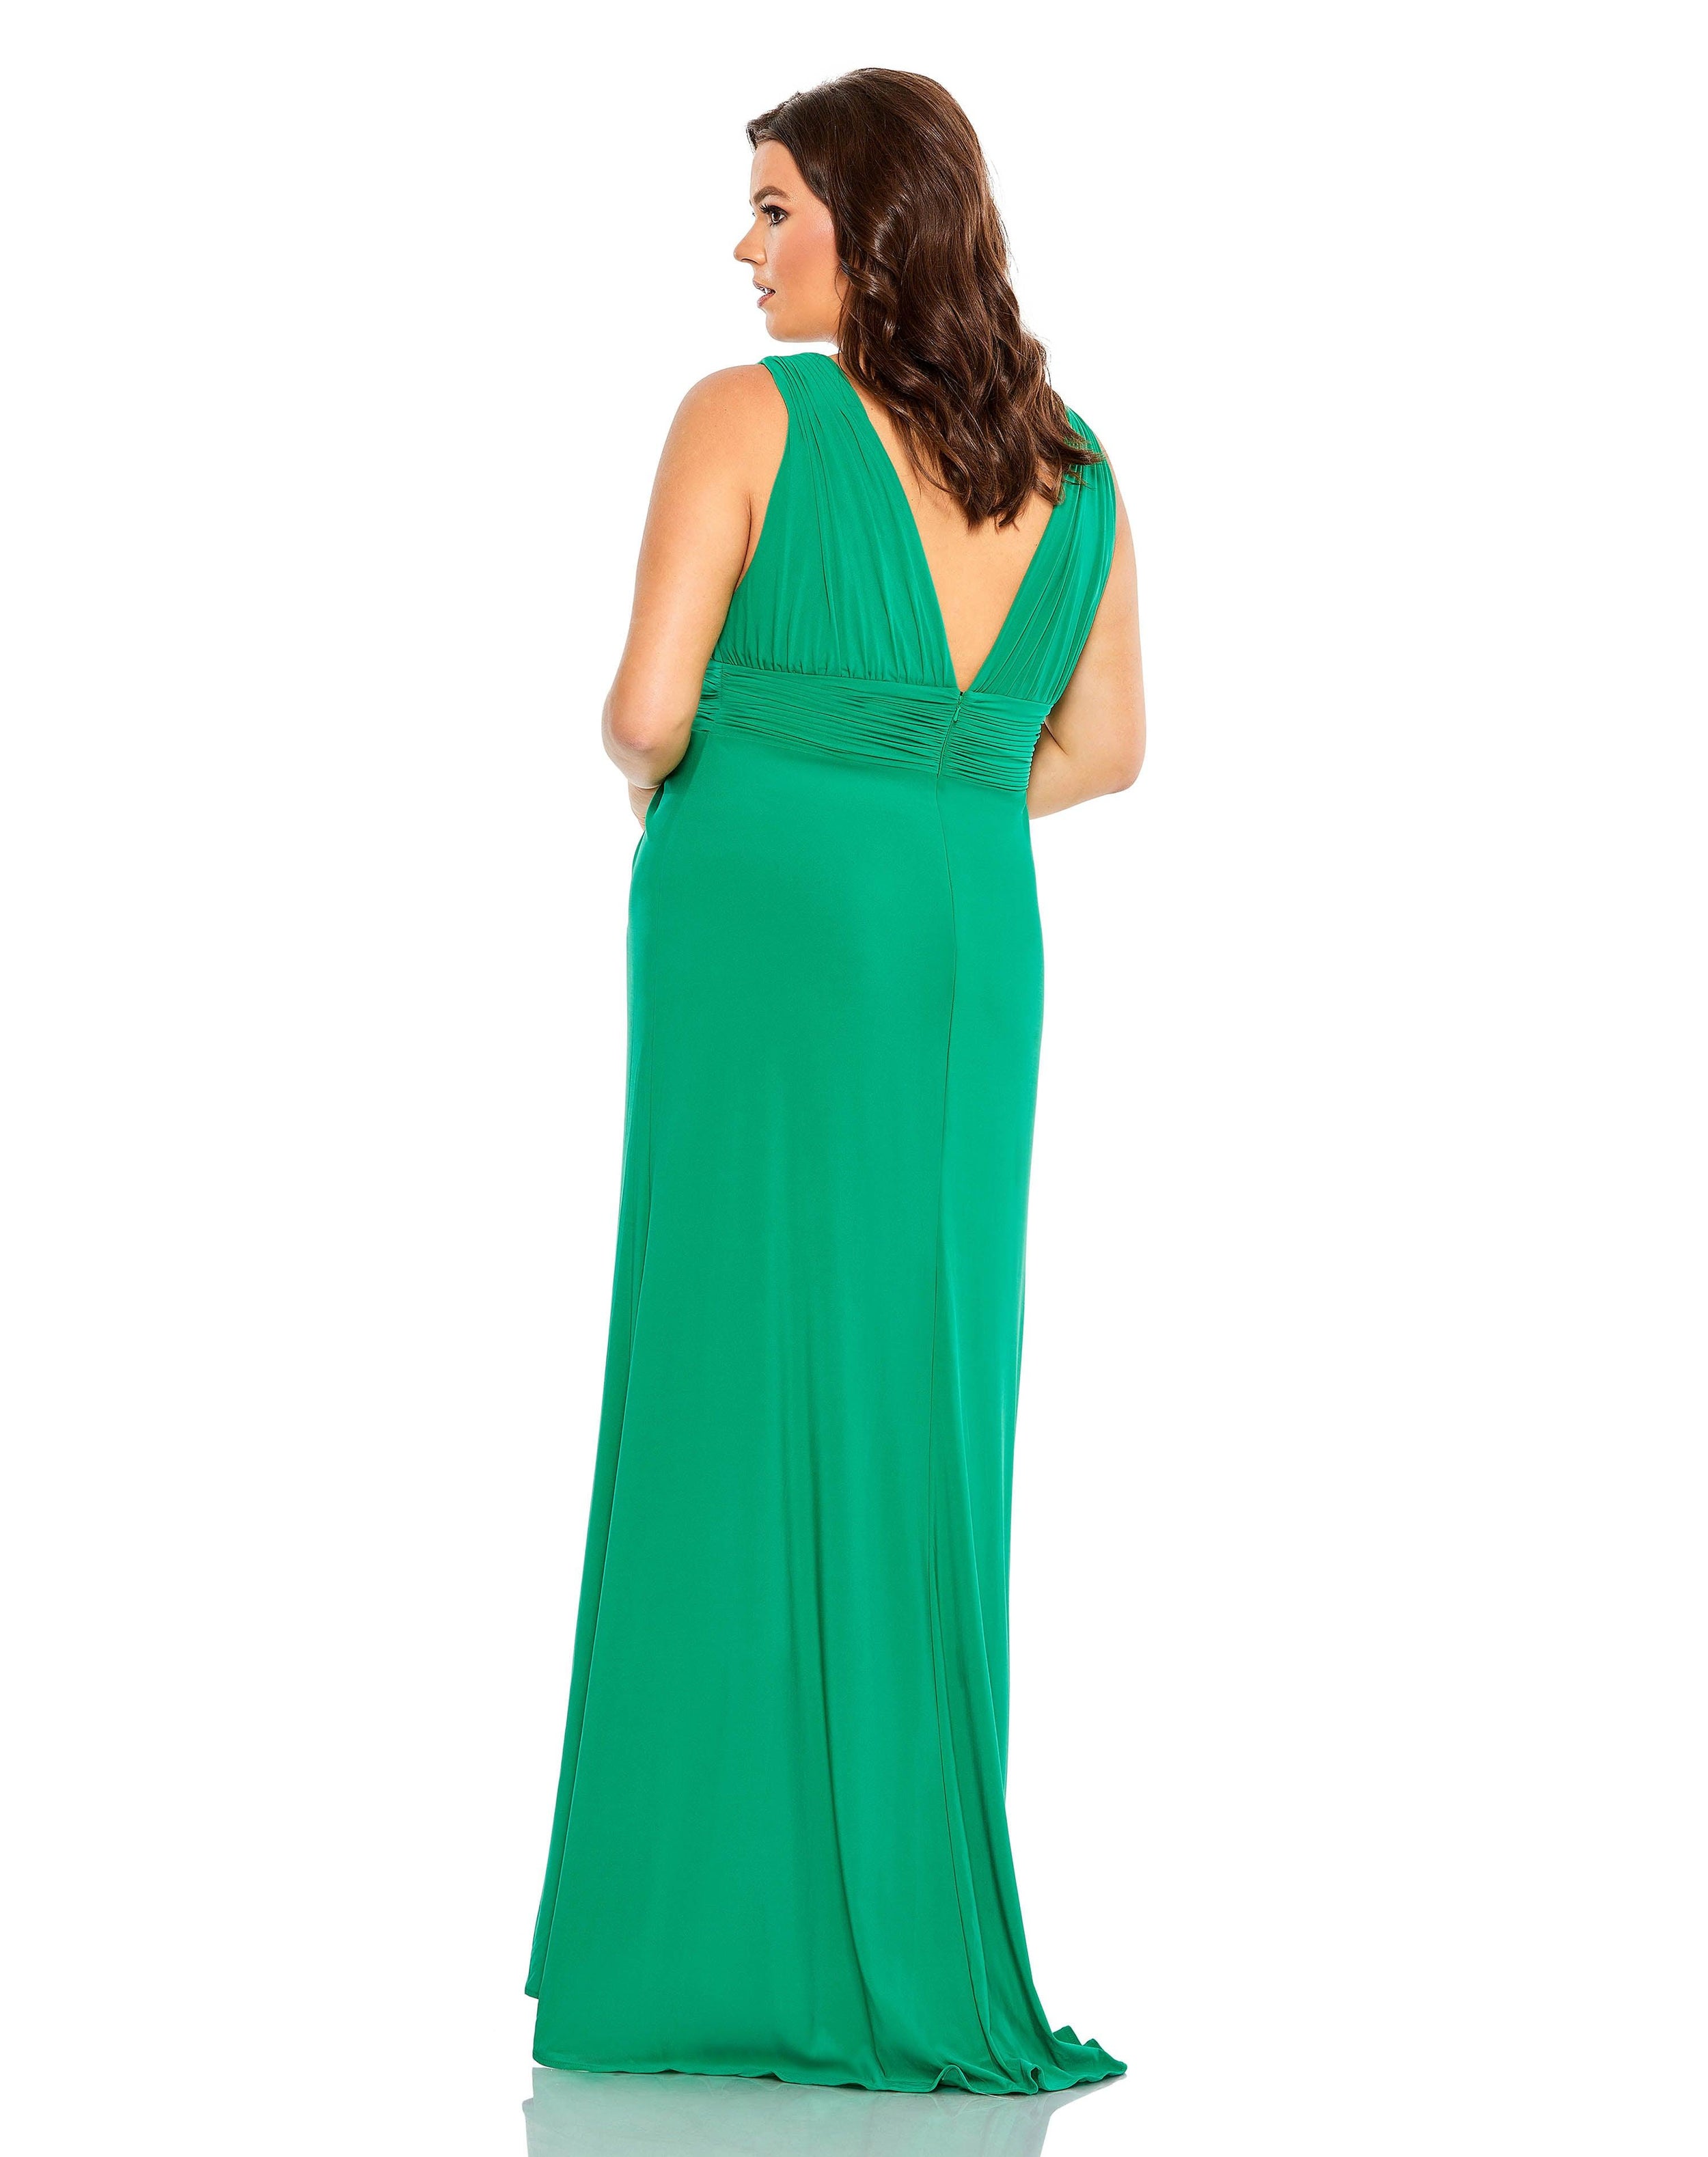 Plus Size Dresses Fabulouss Long Sleeveless Plus Size Formal Dress Jade